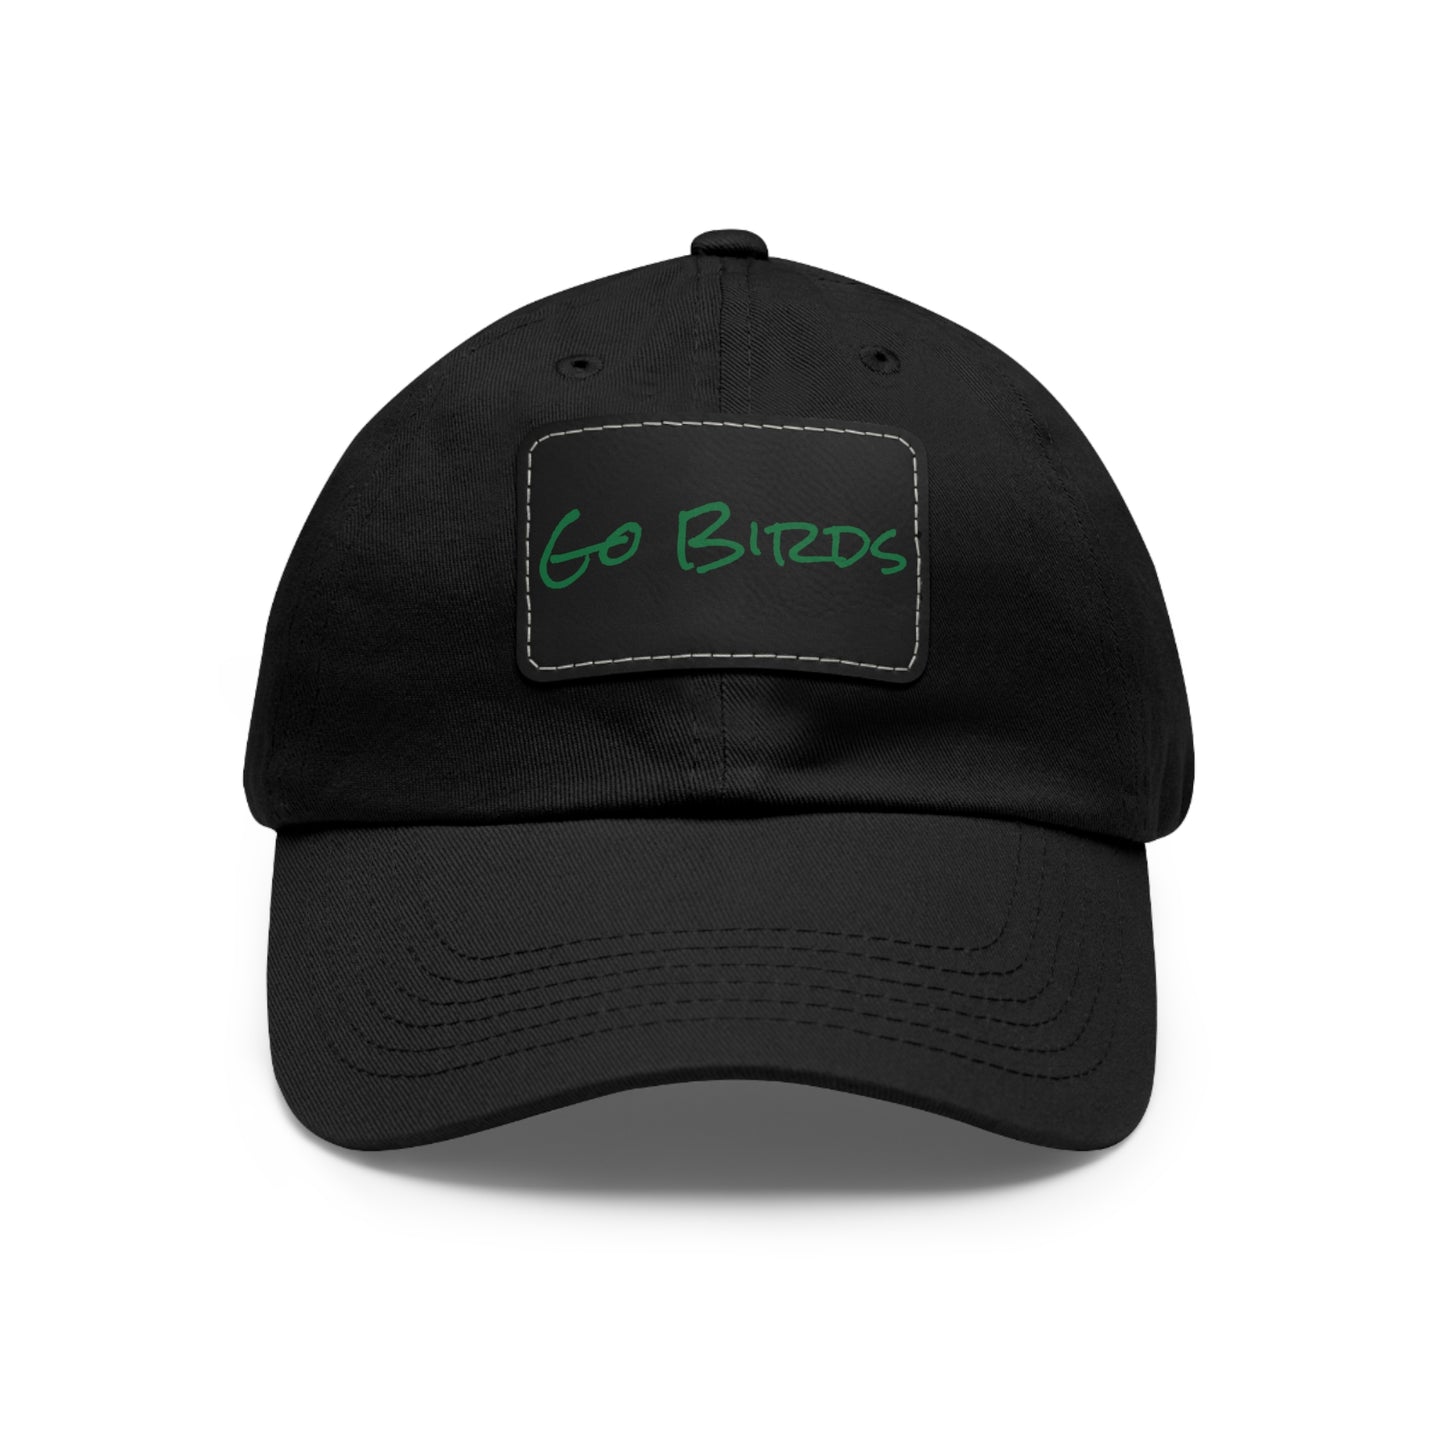 Go Birds Hat